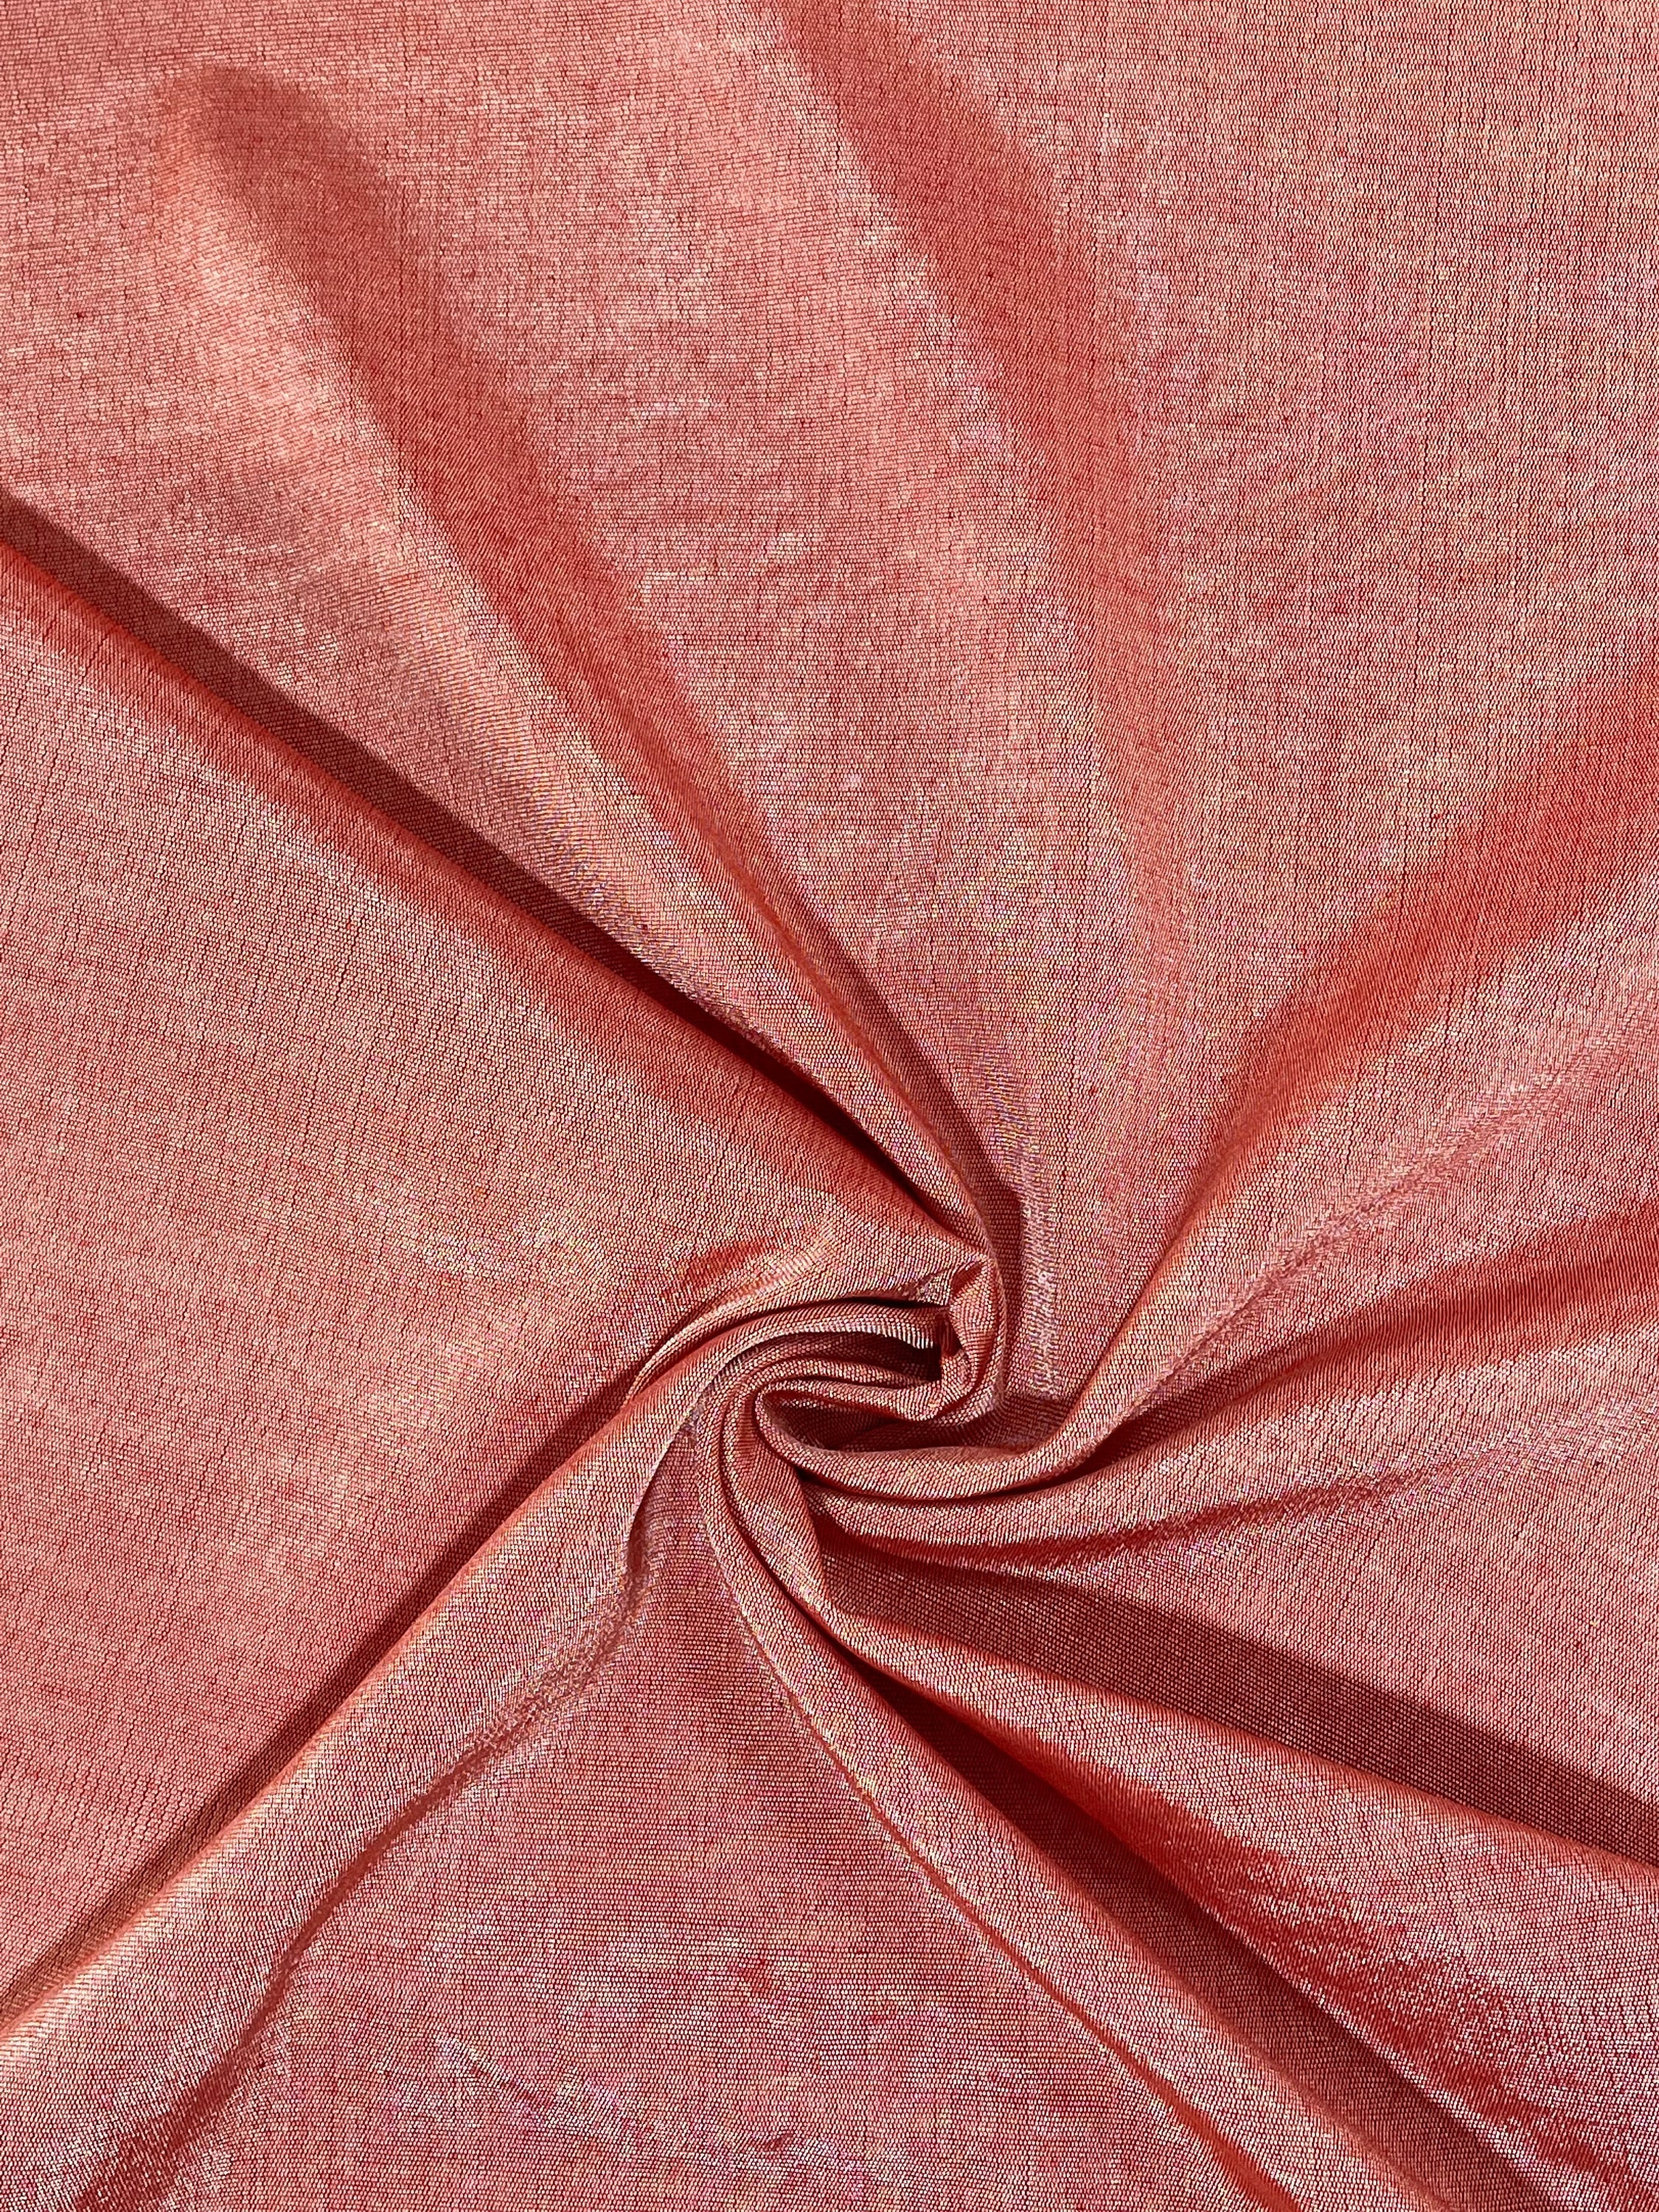 Organic Cotton Fabric. Super Soft & Light - ANGEL'S BREATH ( Salmon Pink )